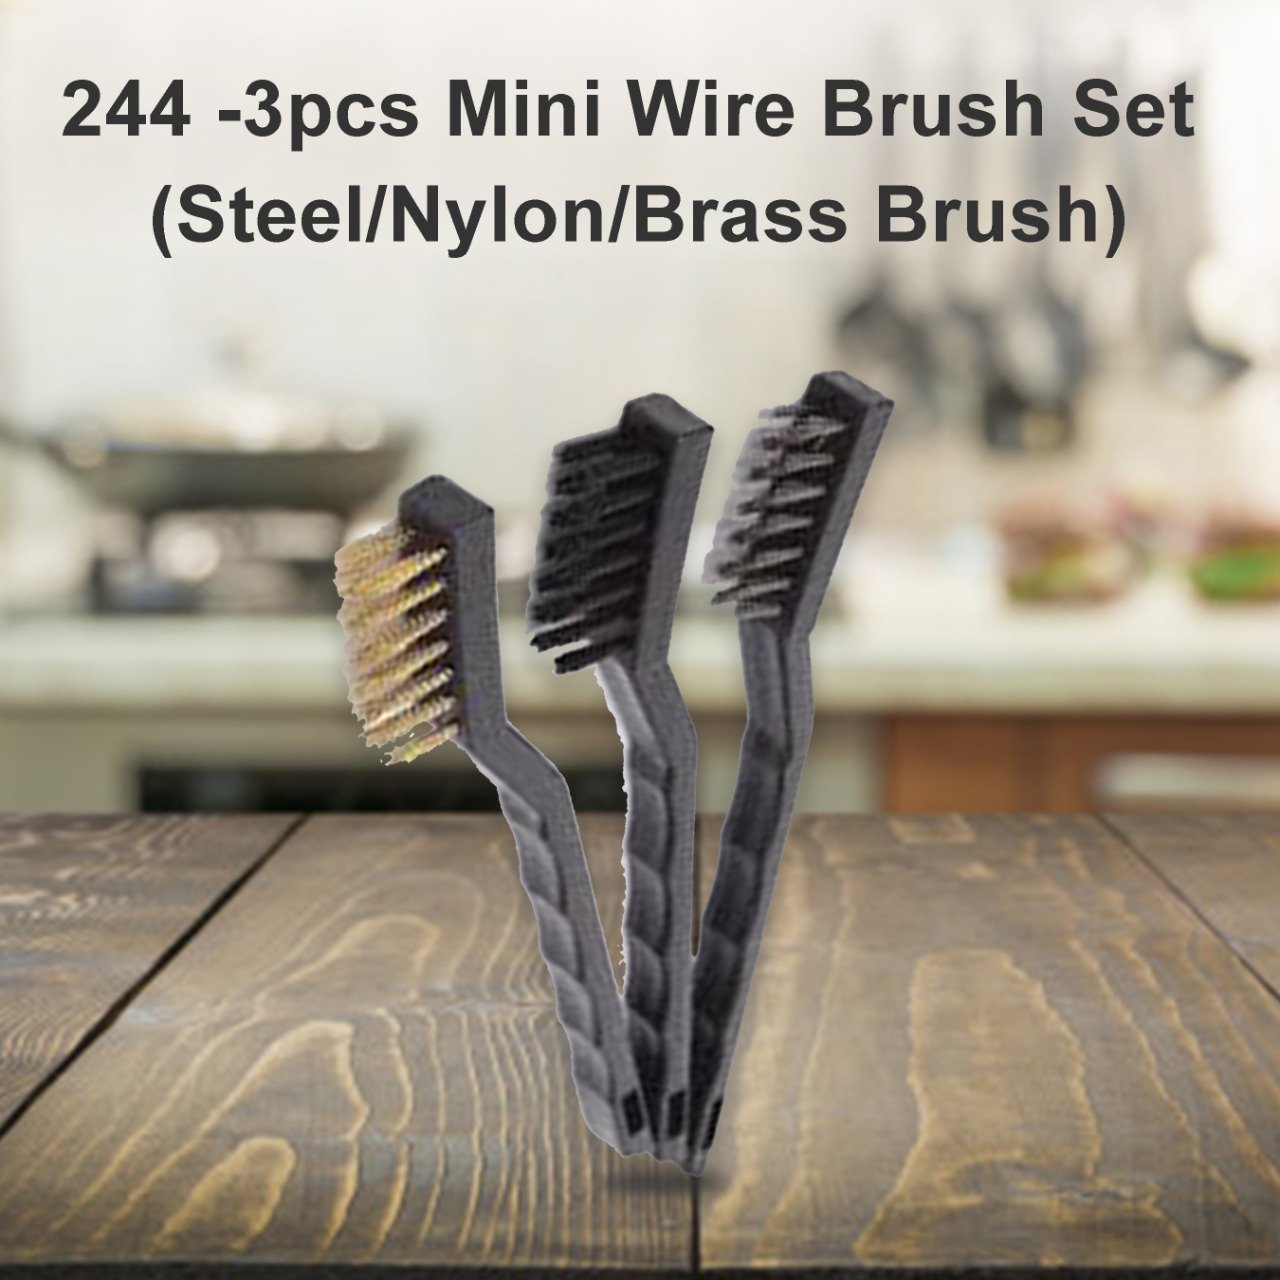 0244 -3pcs Mini Wire Brush Set (Steel/Nylon/Brass Brush) - SkyShopy